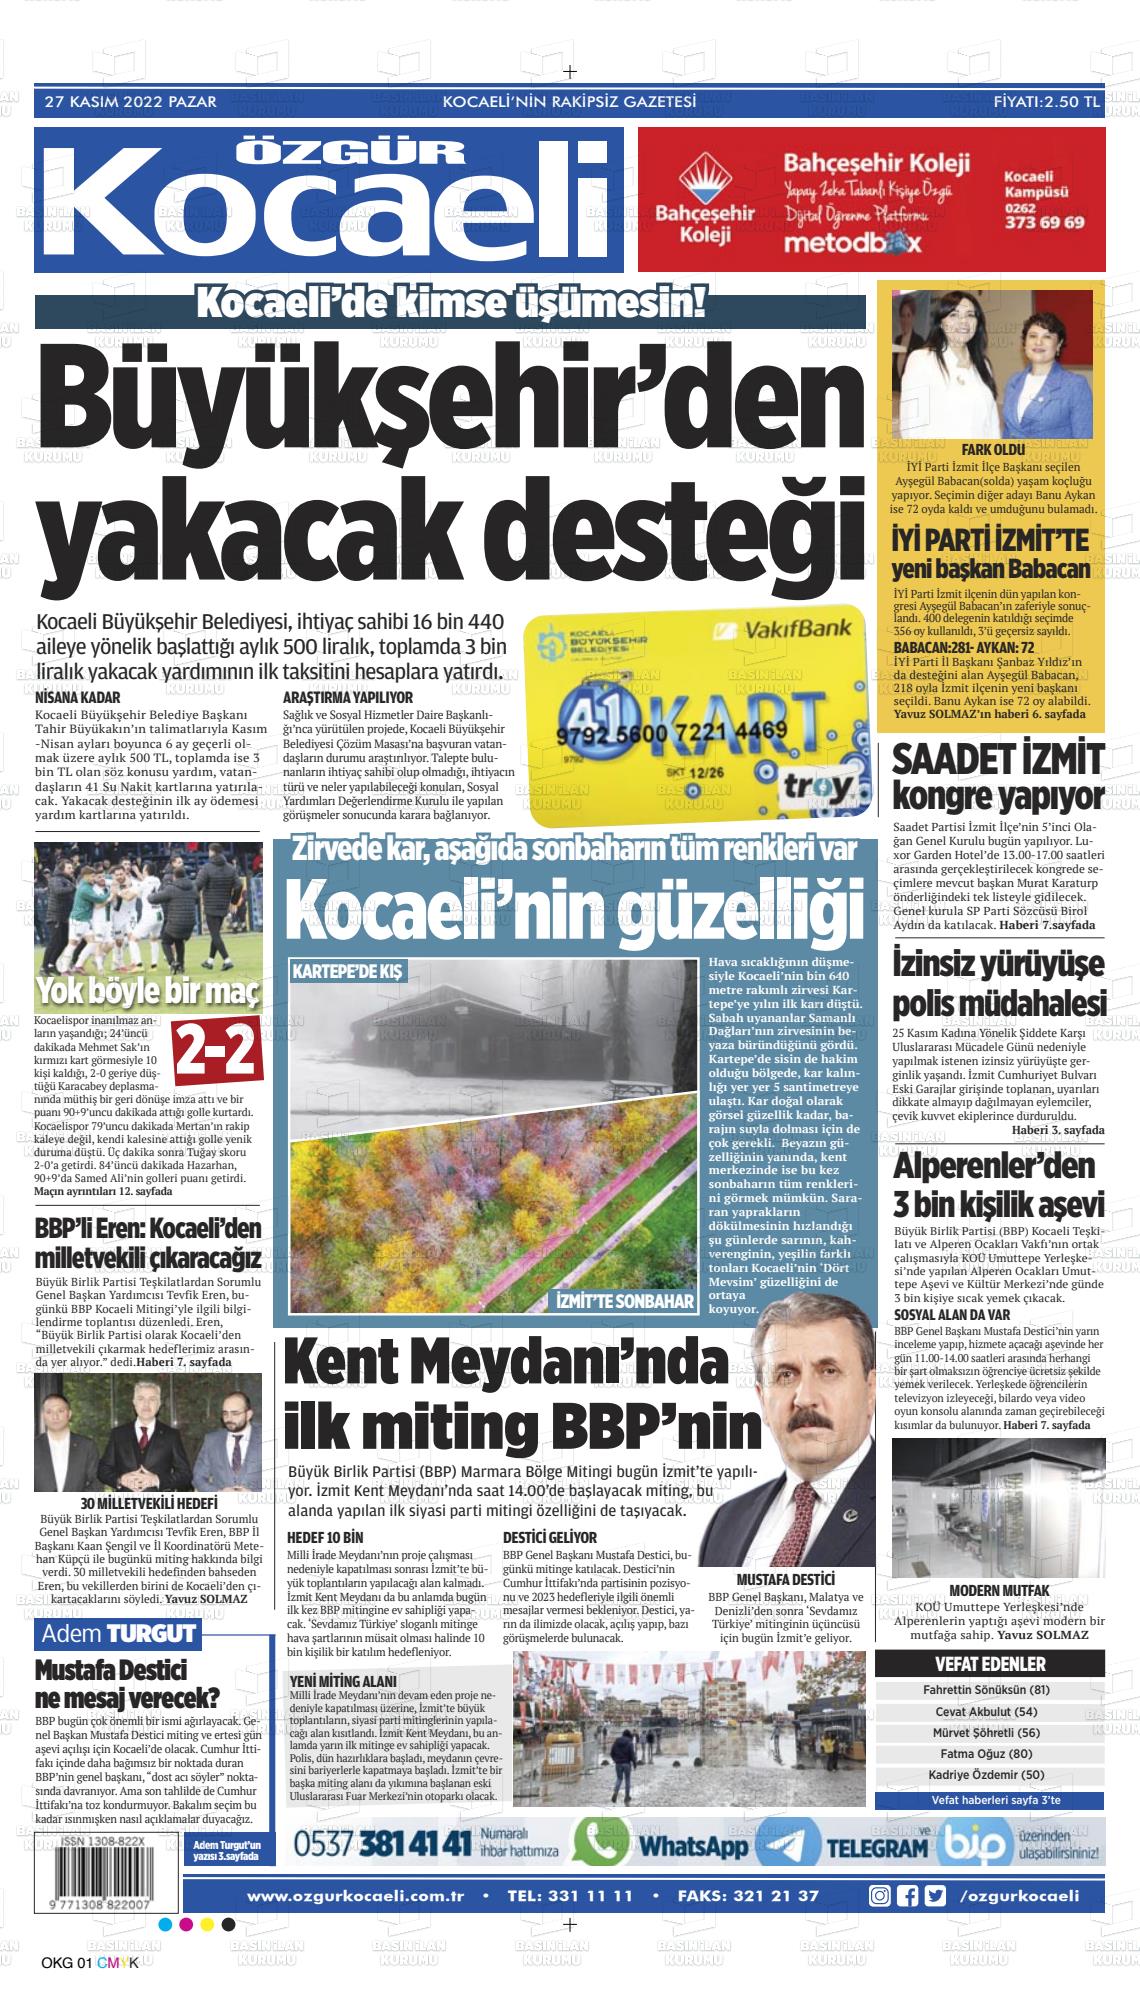 27 Kasım 2022 Özgür Kocaeli Gazete Manşeti